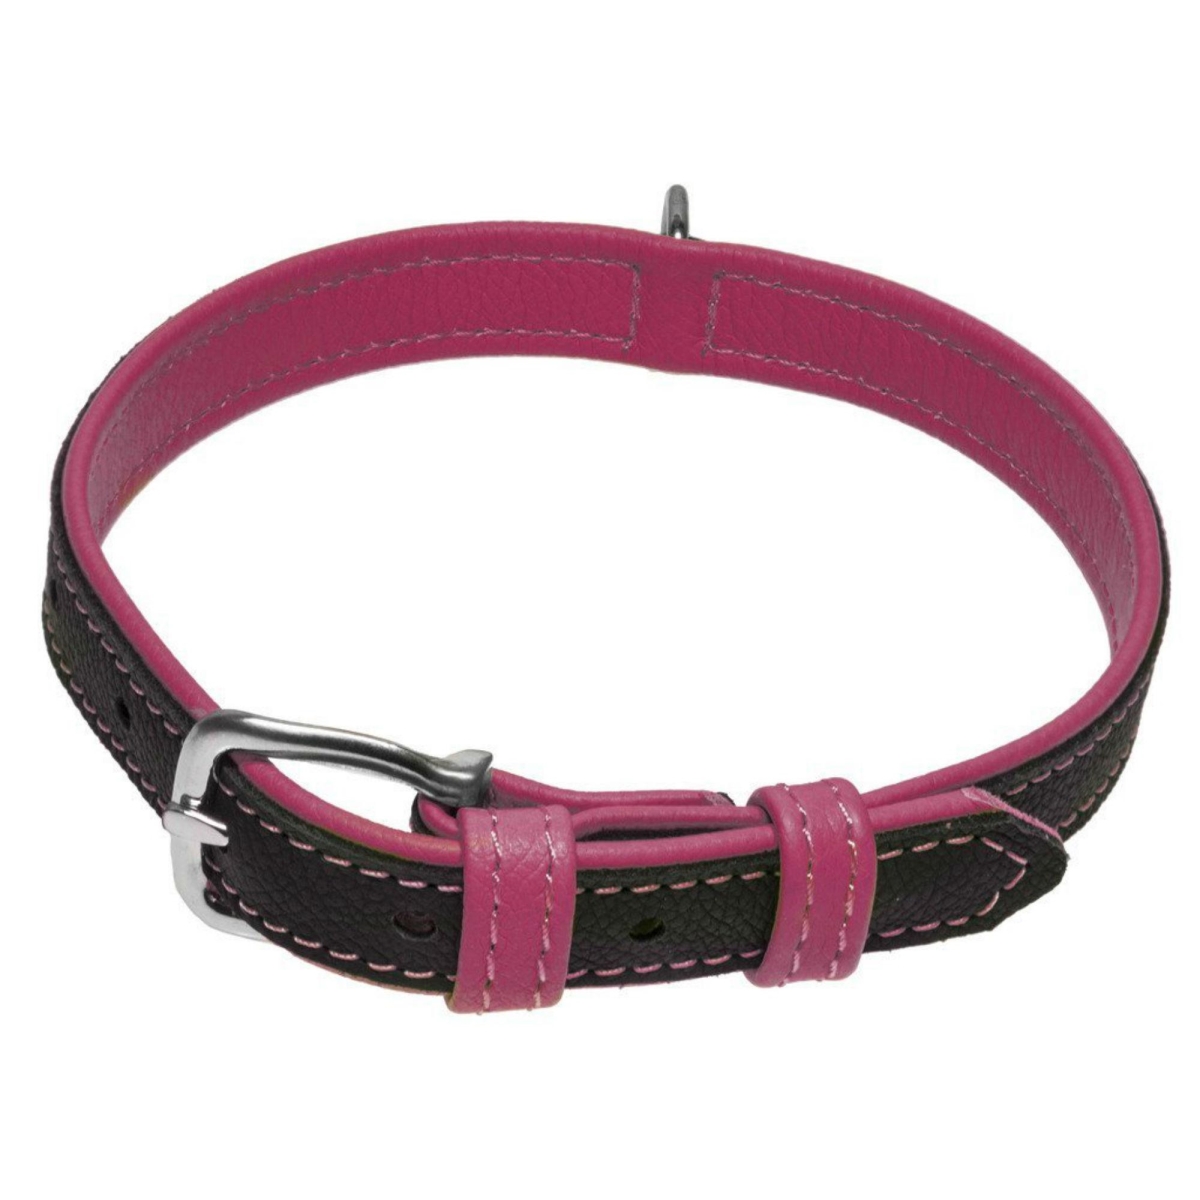 Dog Line L1012-pink-md Soft Leather Dual Color Dog Collar, Hot Pink - Medium